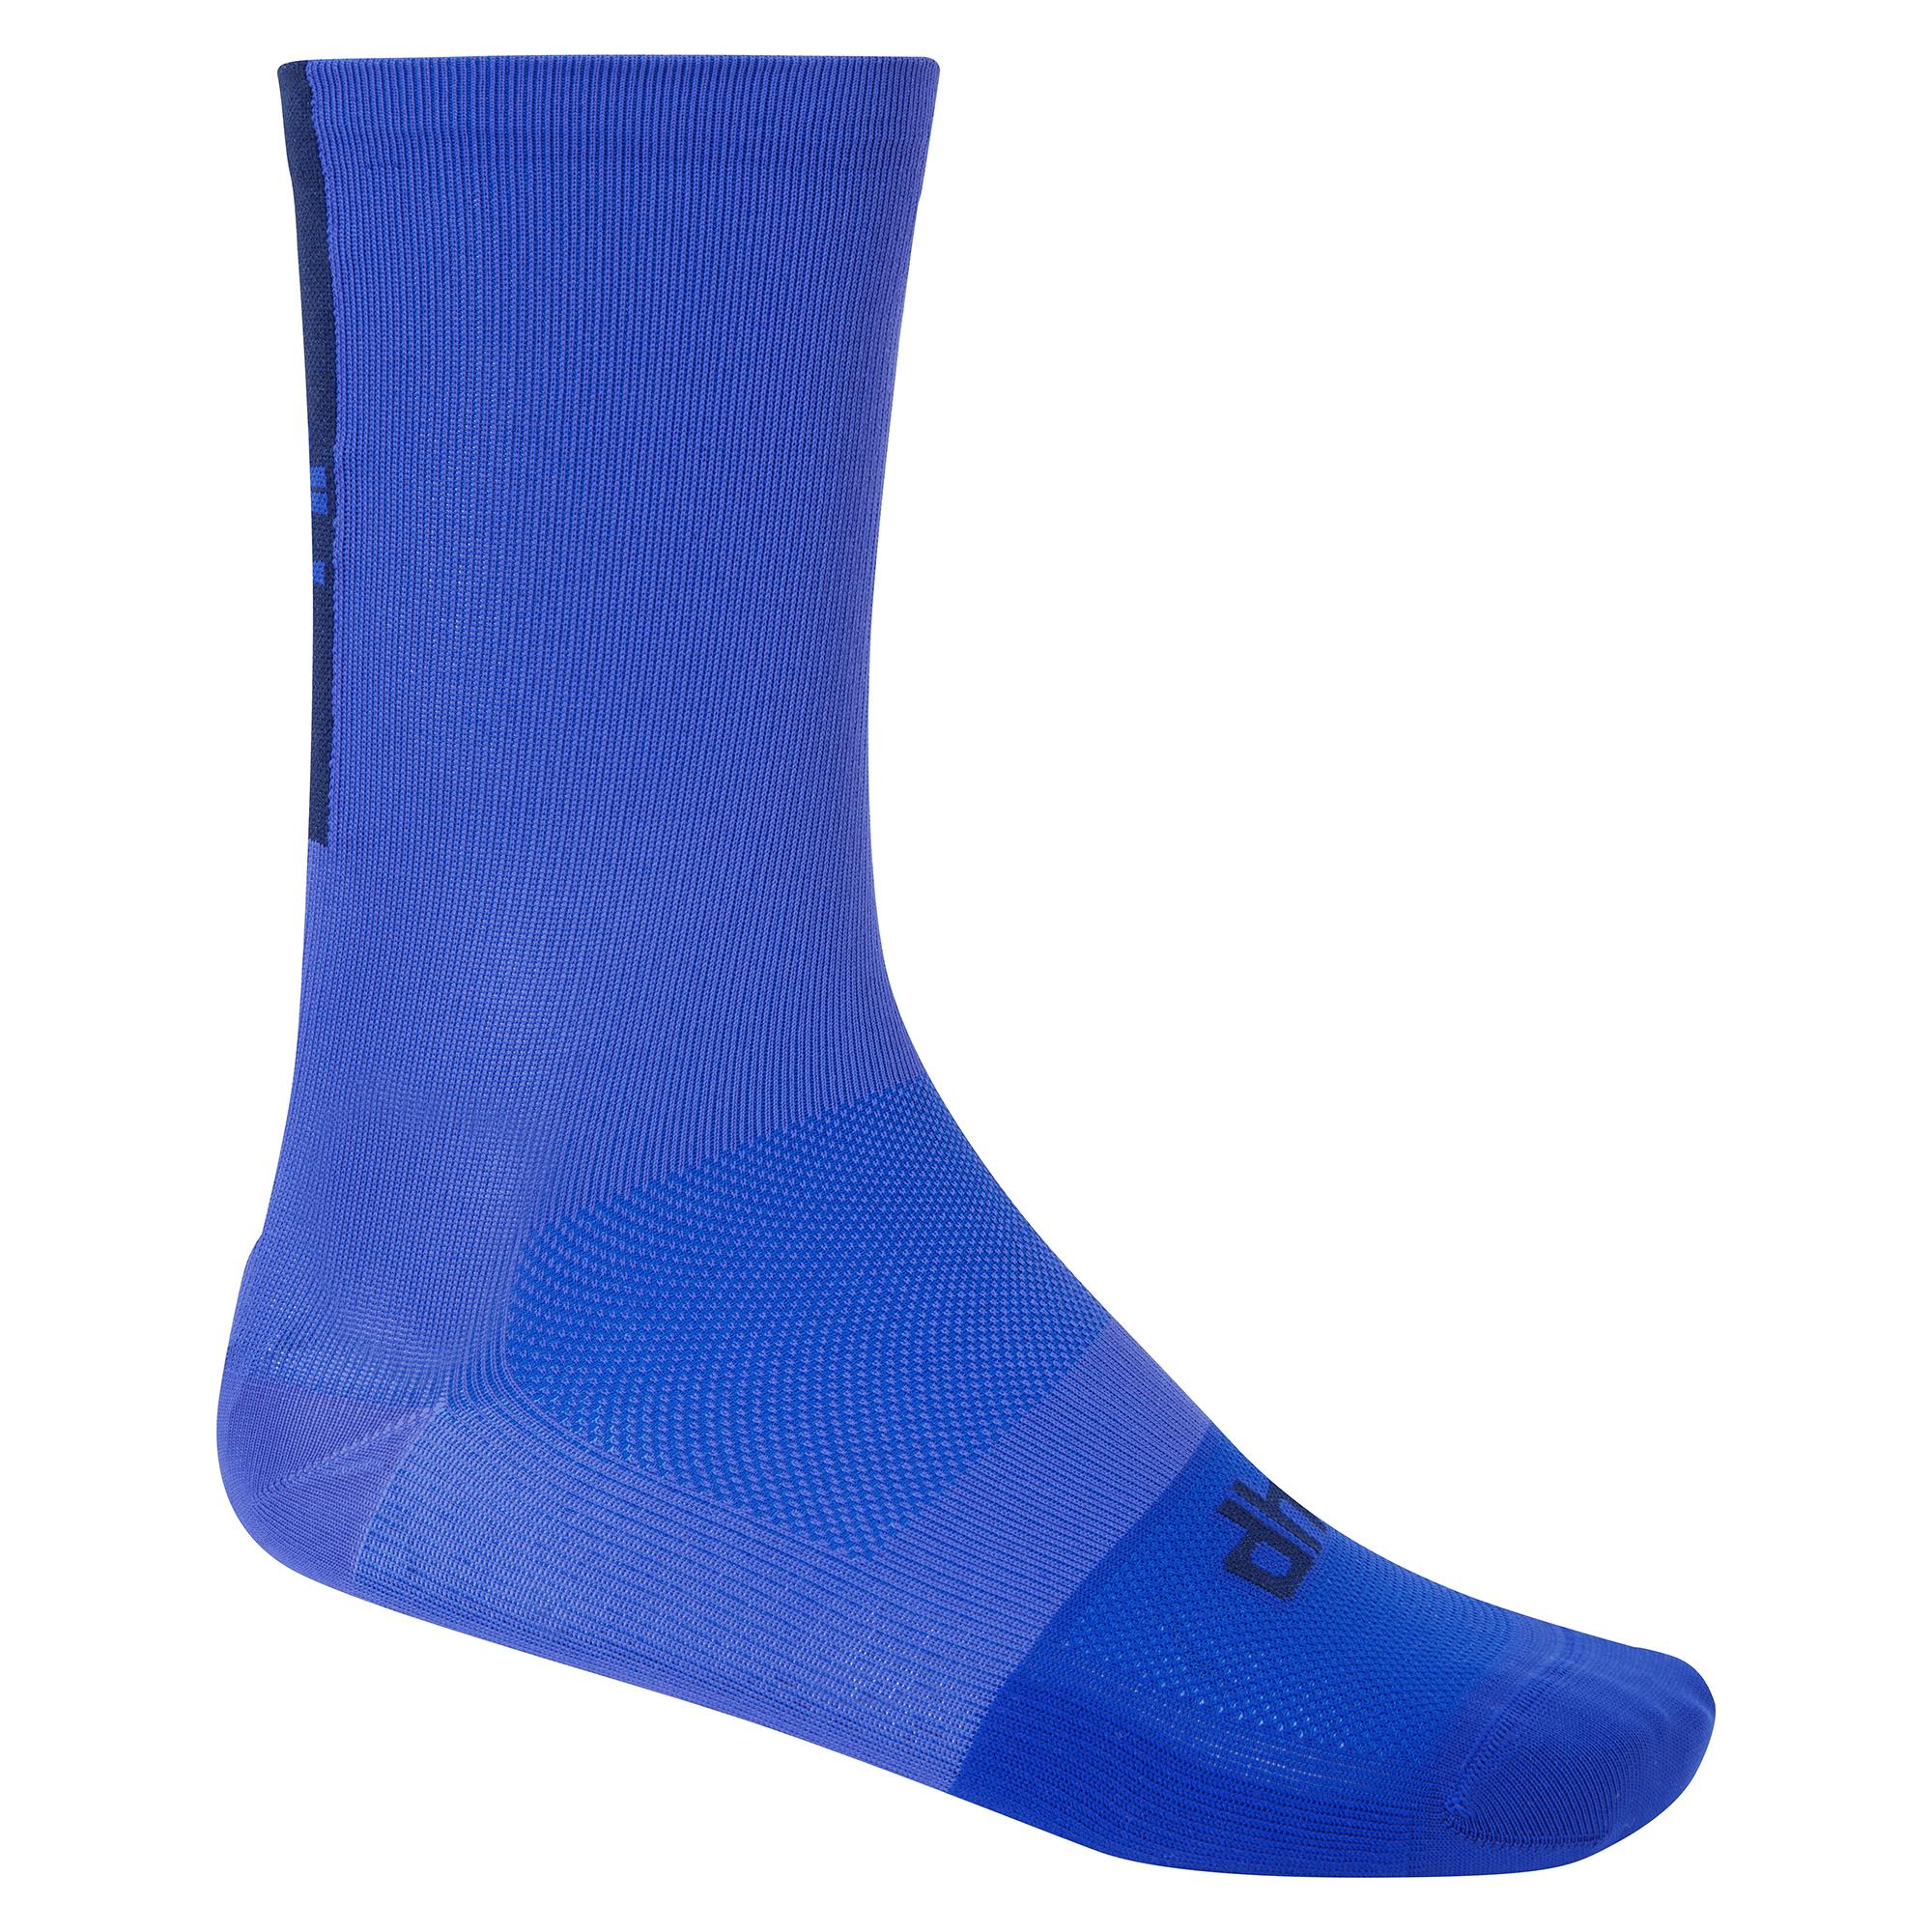 Dhb Aeron Tall Sock - Blueing